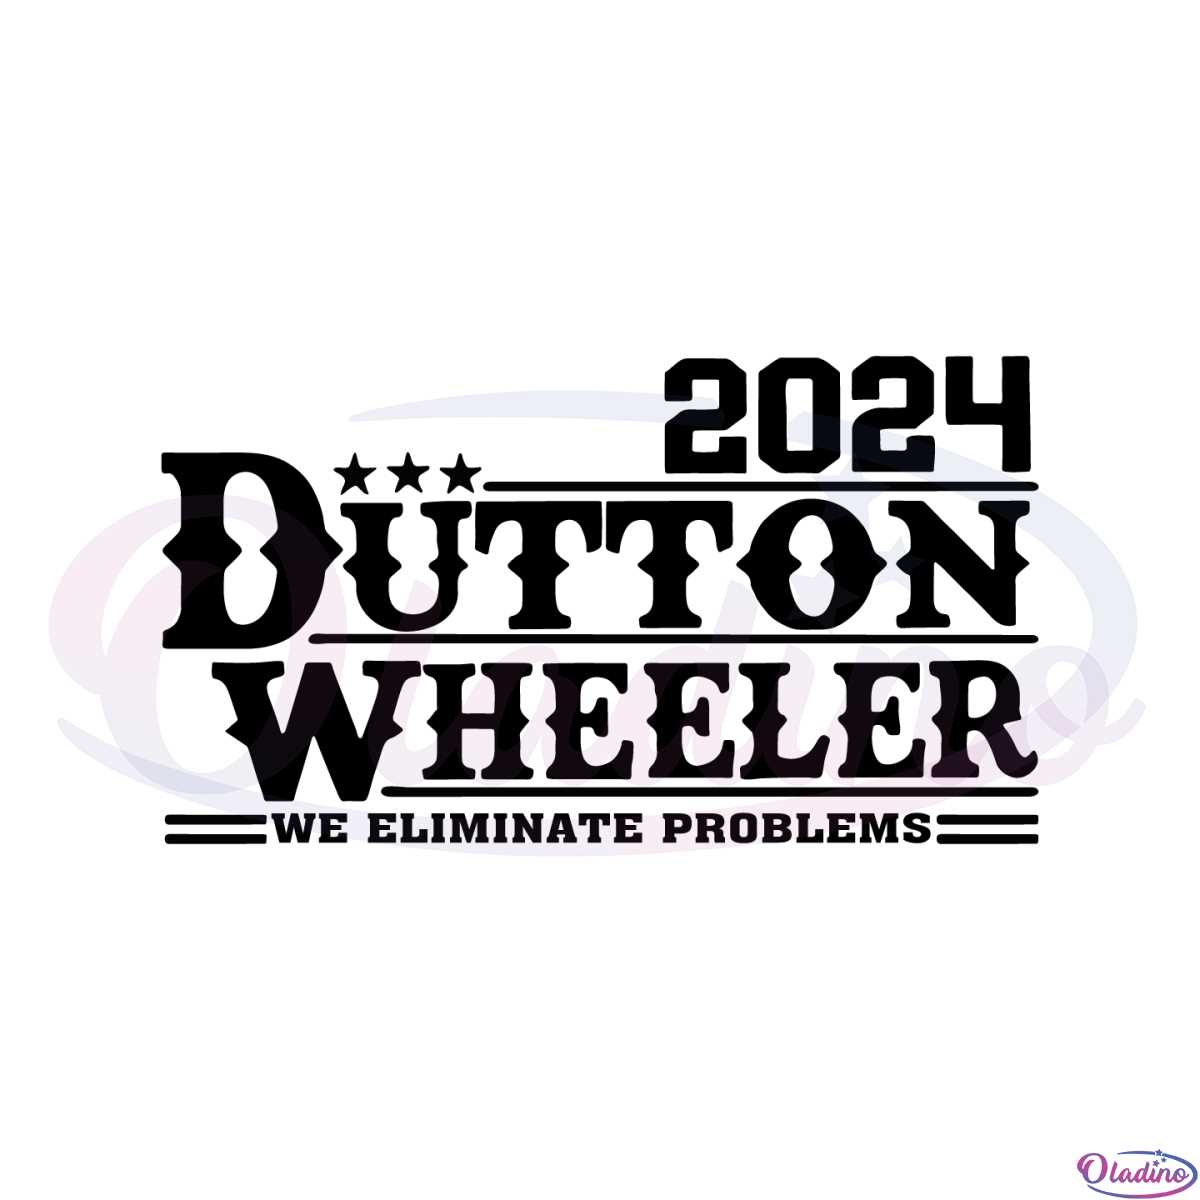 dutton-wheeler-2024-beth-dutton-rip-wheeler-svg-cutting-files